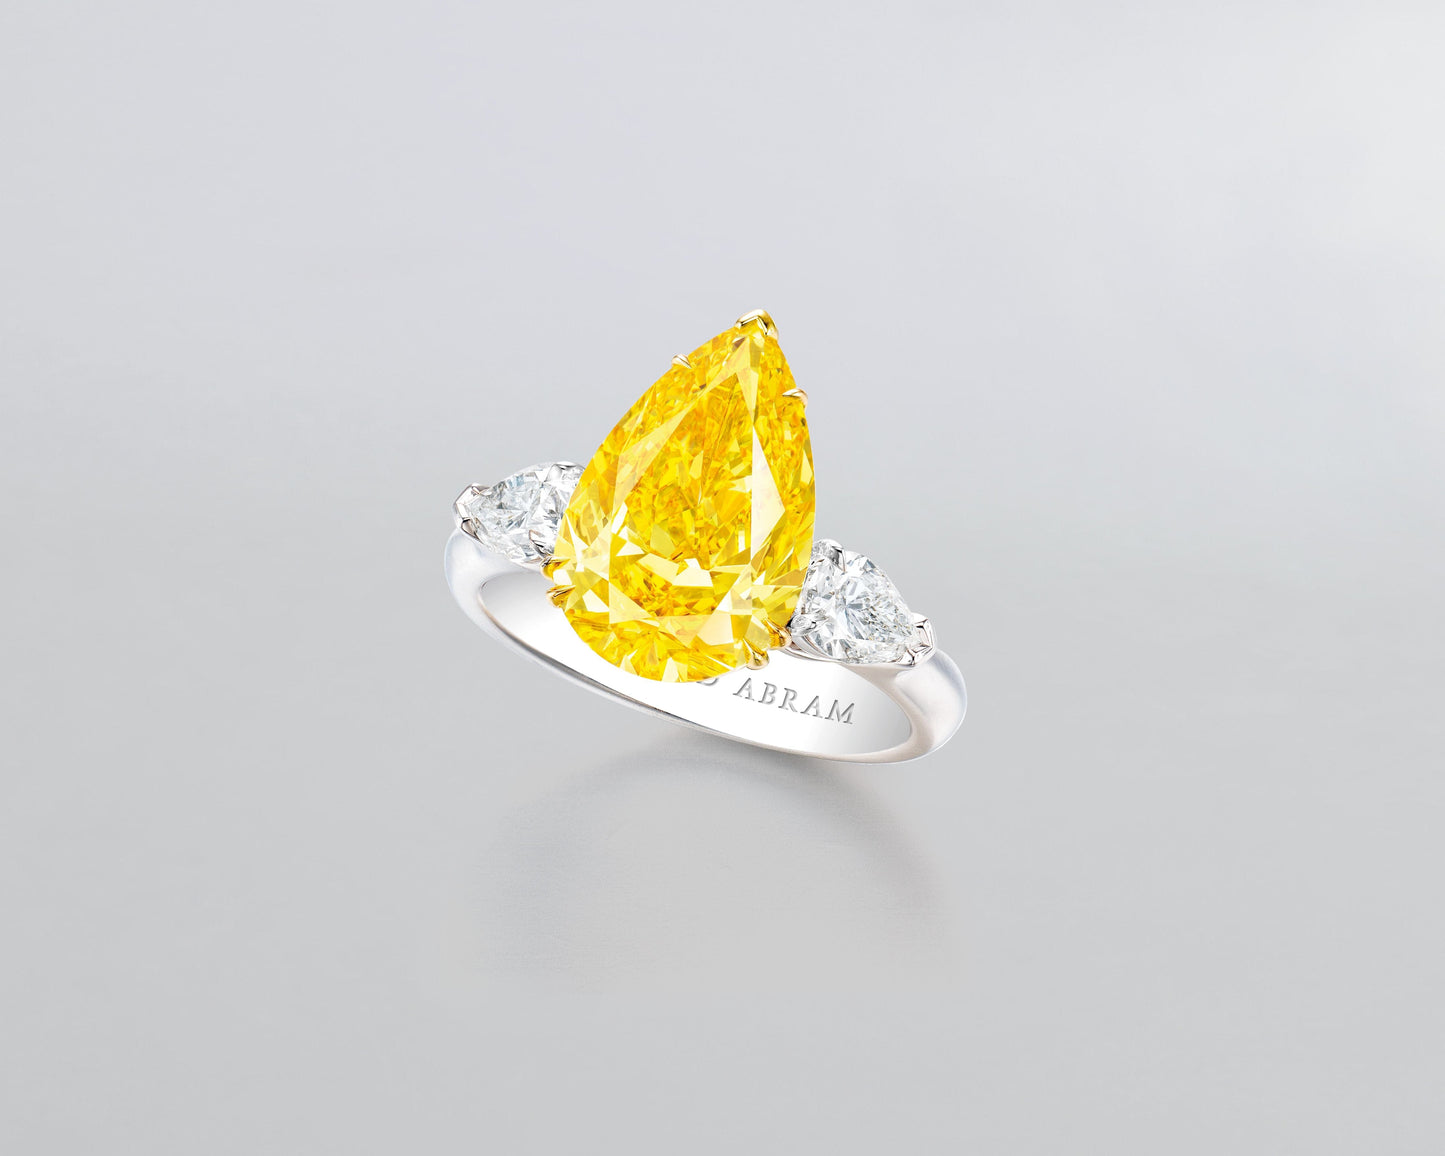 3.63 carat Pear Shape Fancy Vivid Orange Yellow Diamond Ring